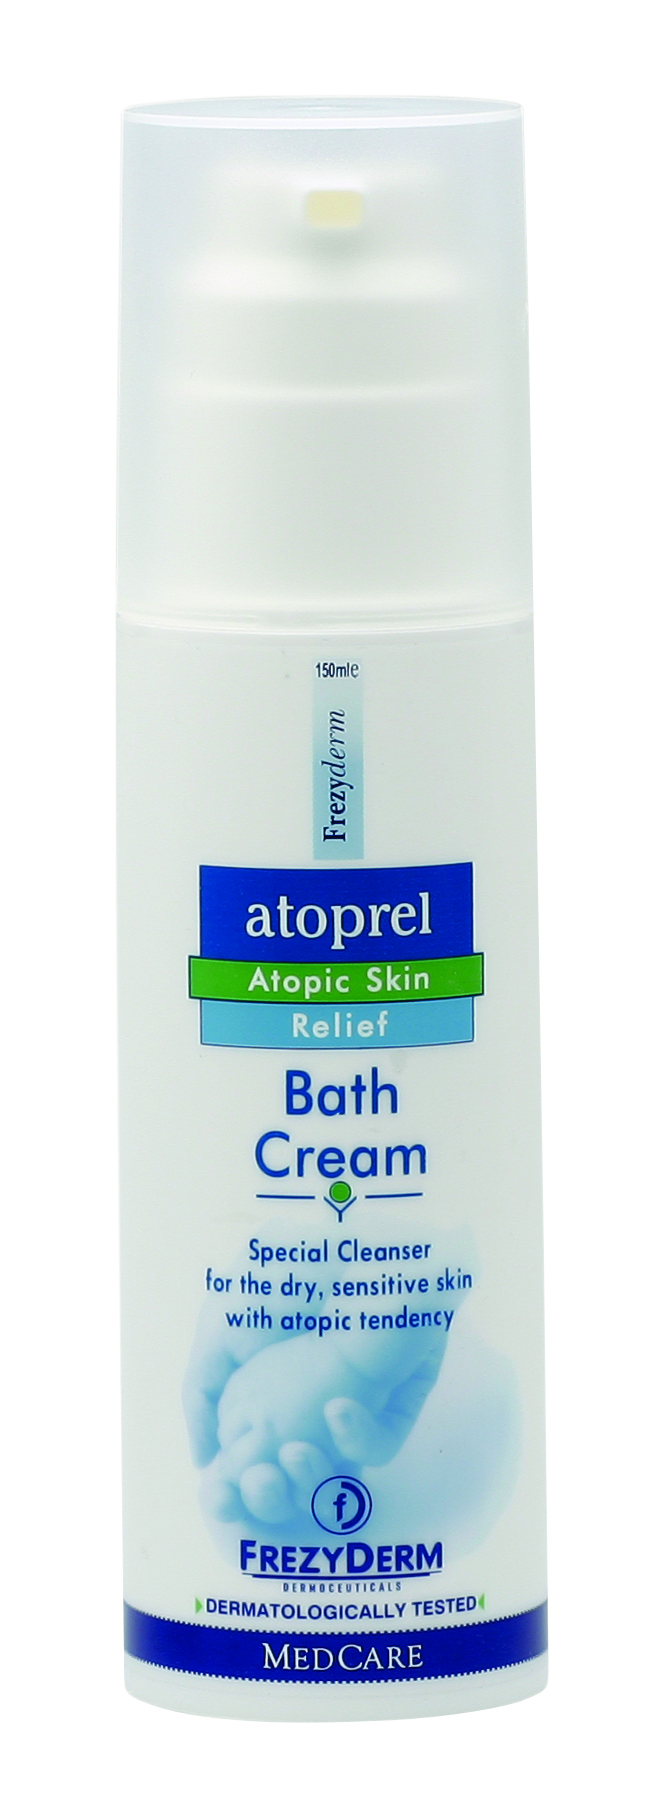 Atoprel Bath Cream